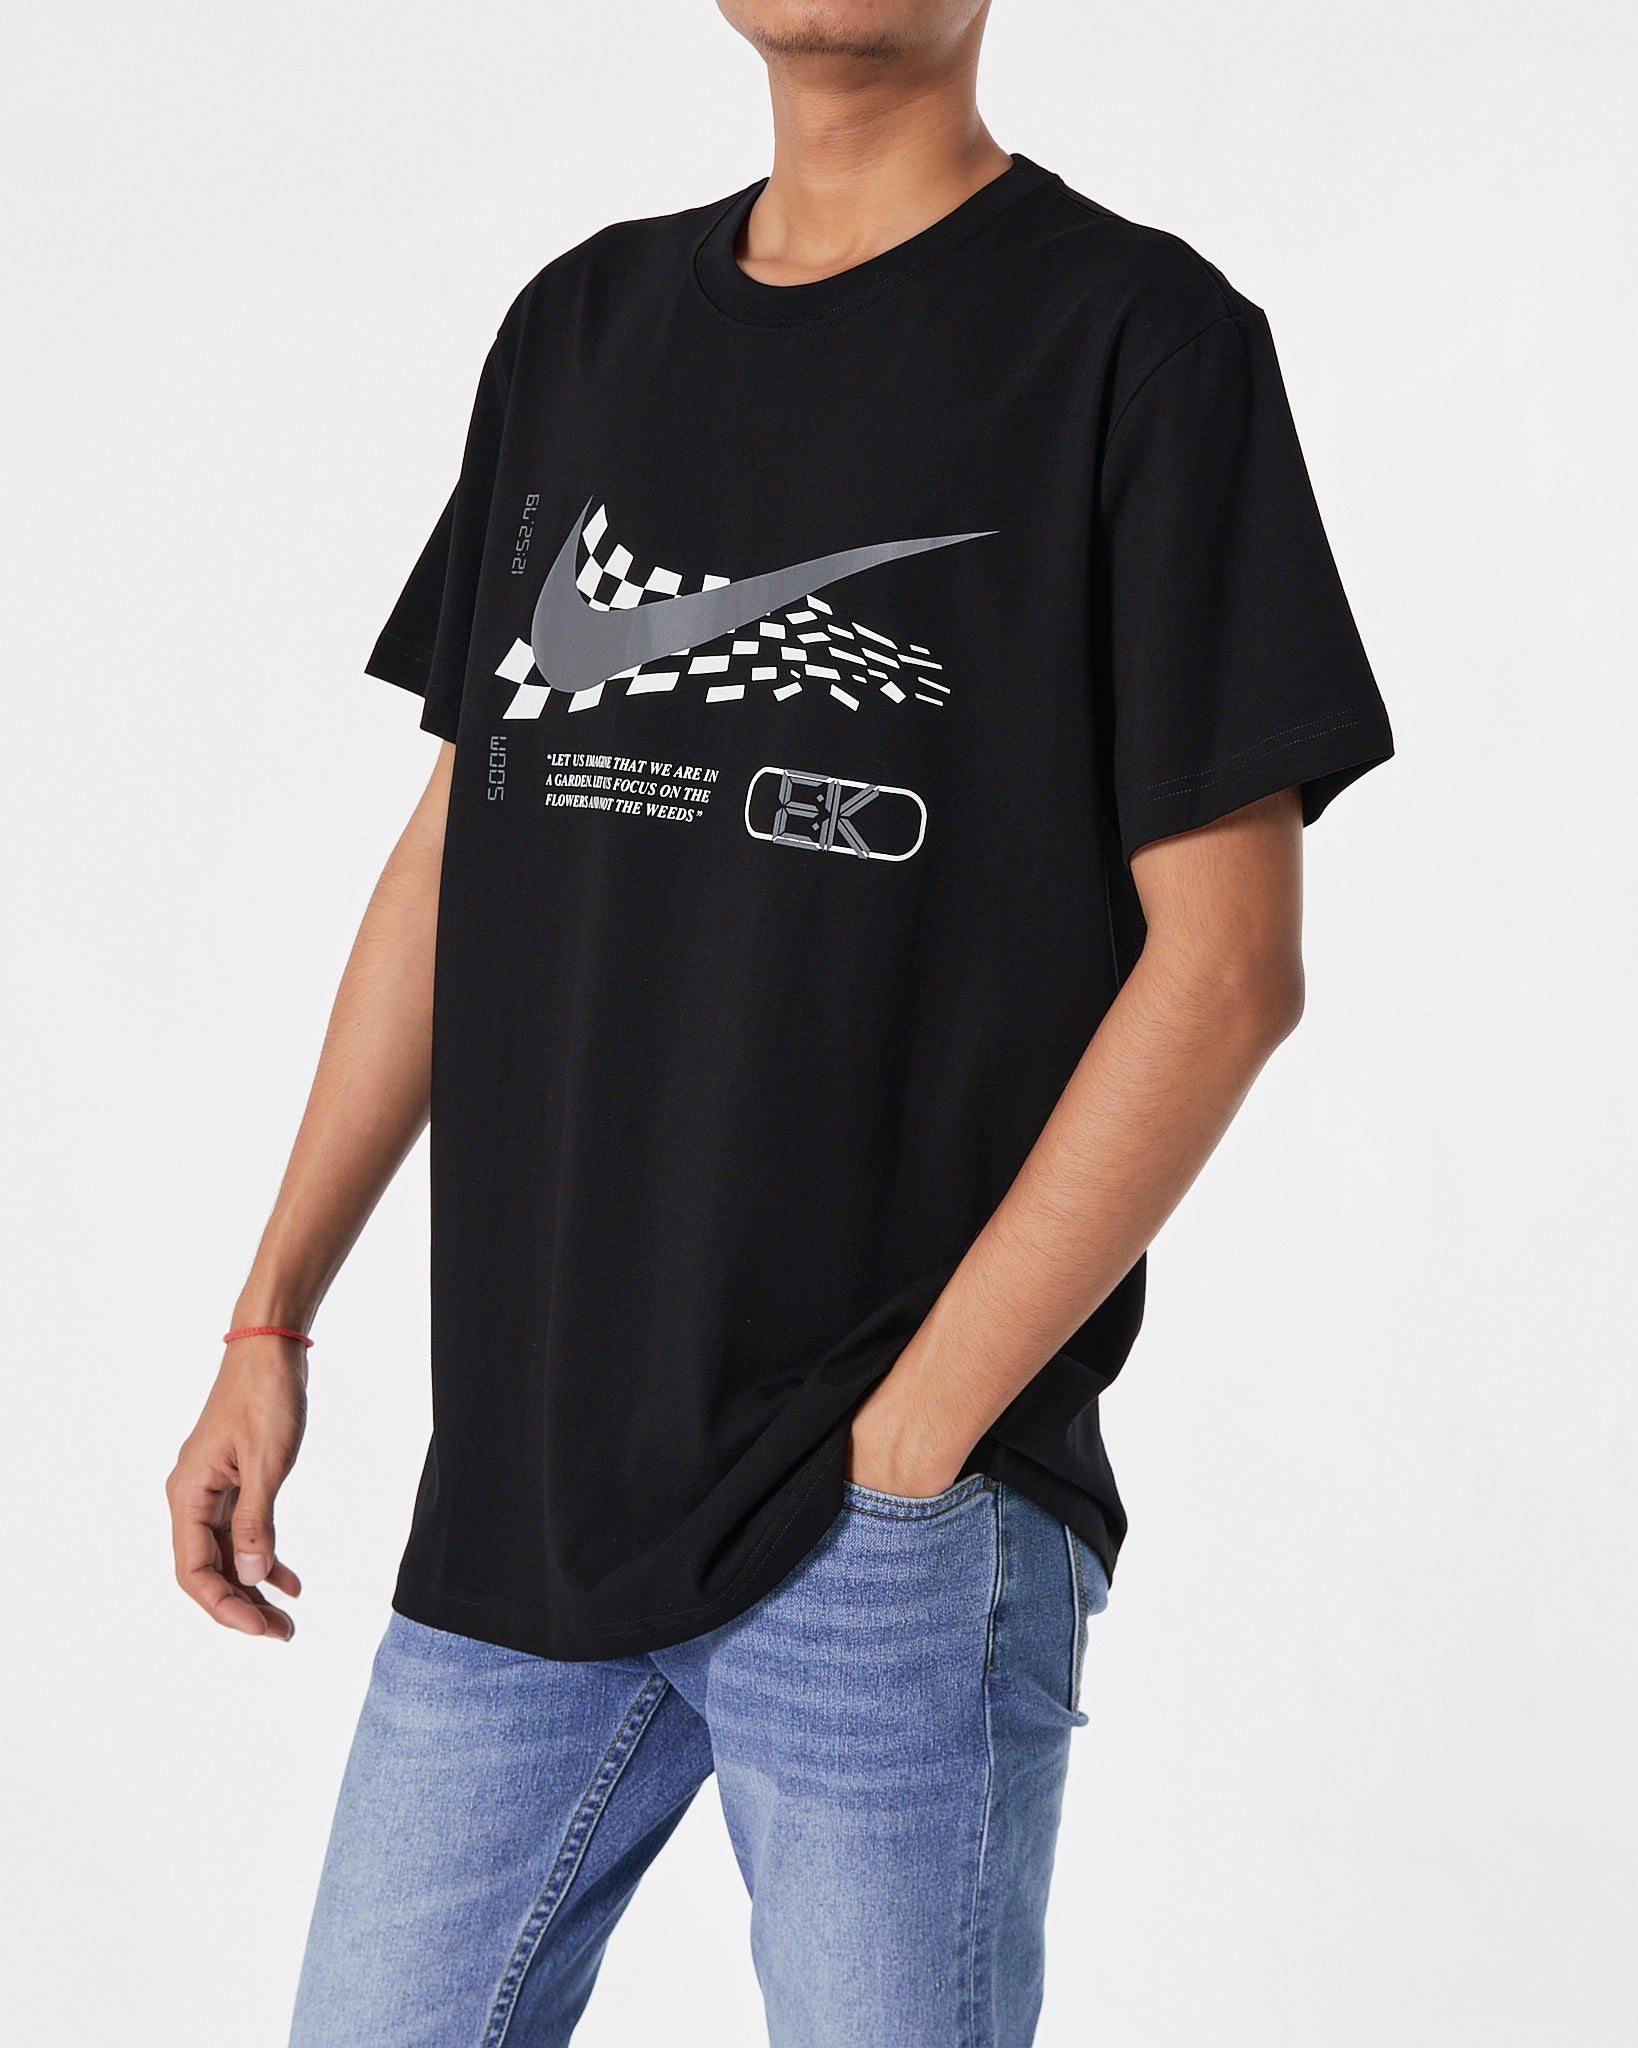 NIK Swooh Logo Printed Men Black T-Shirt 16.90